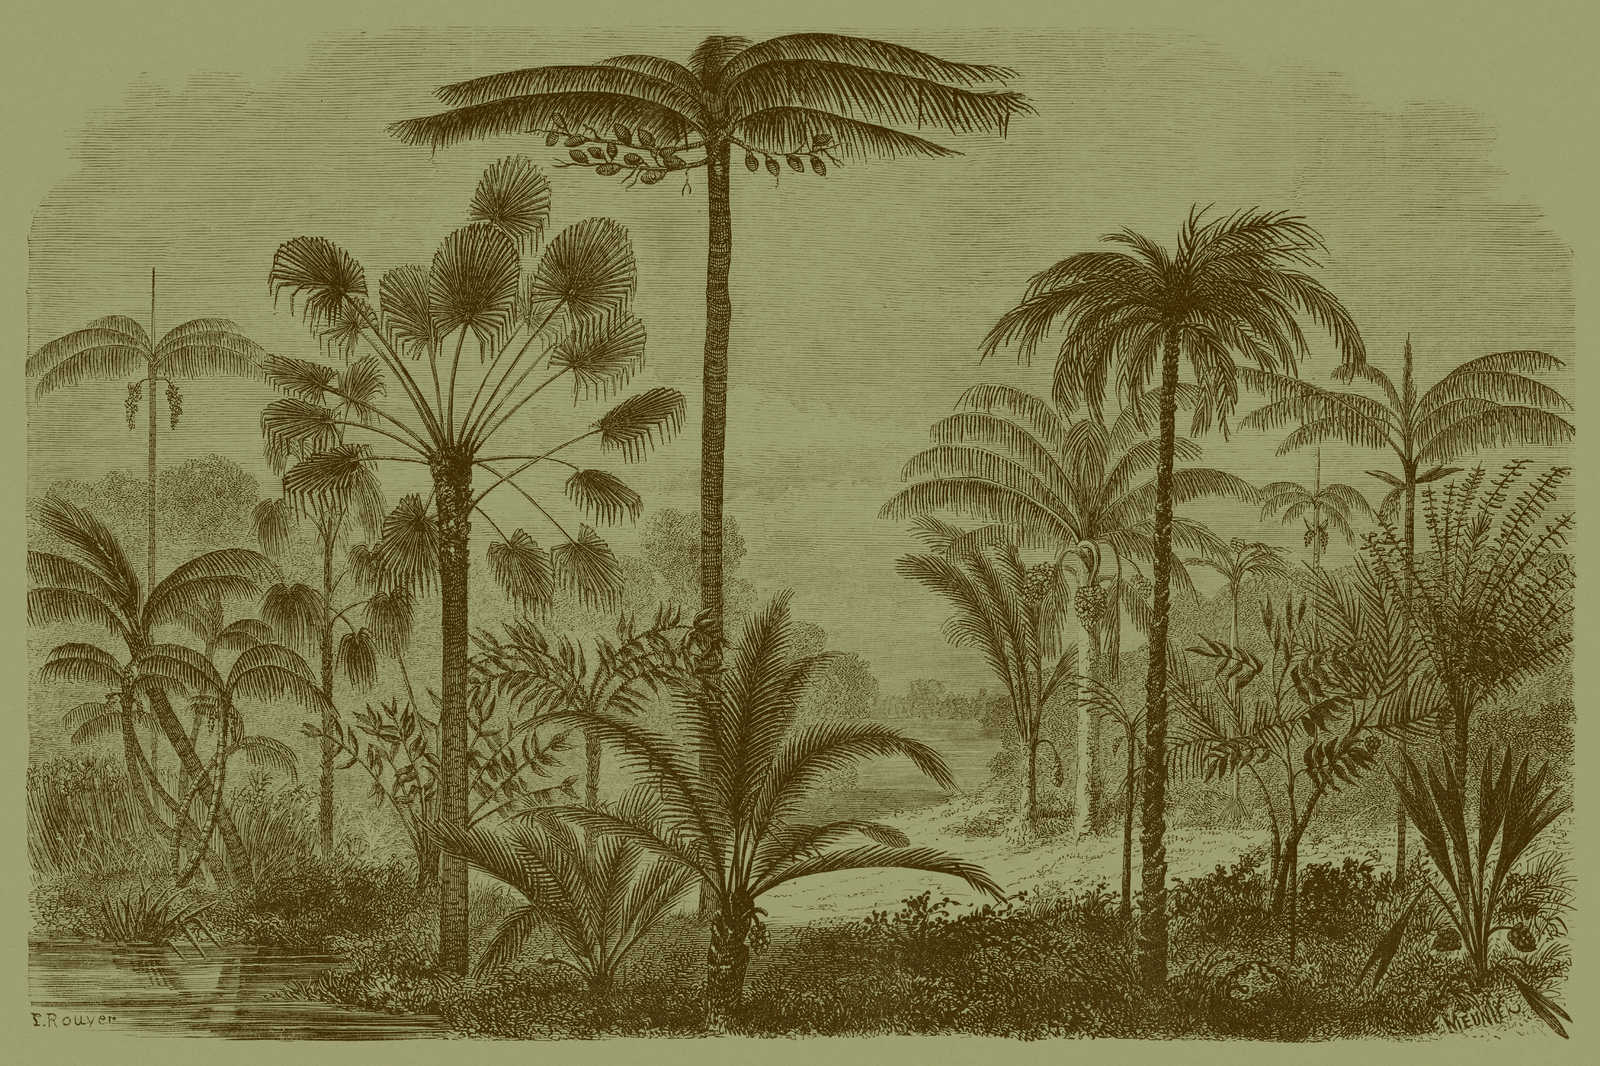             Jurassic 1 - Canvas painting Jungle motif copperplate - 0.90 m x 0.60 m
        